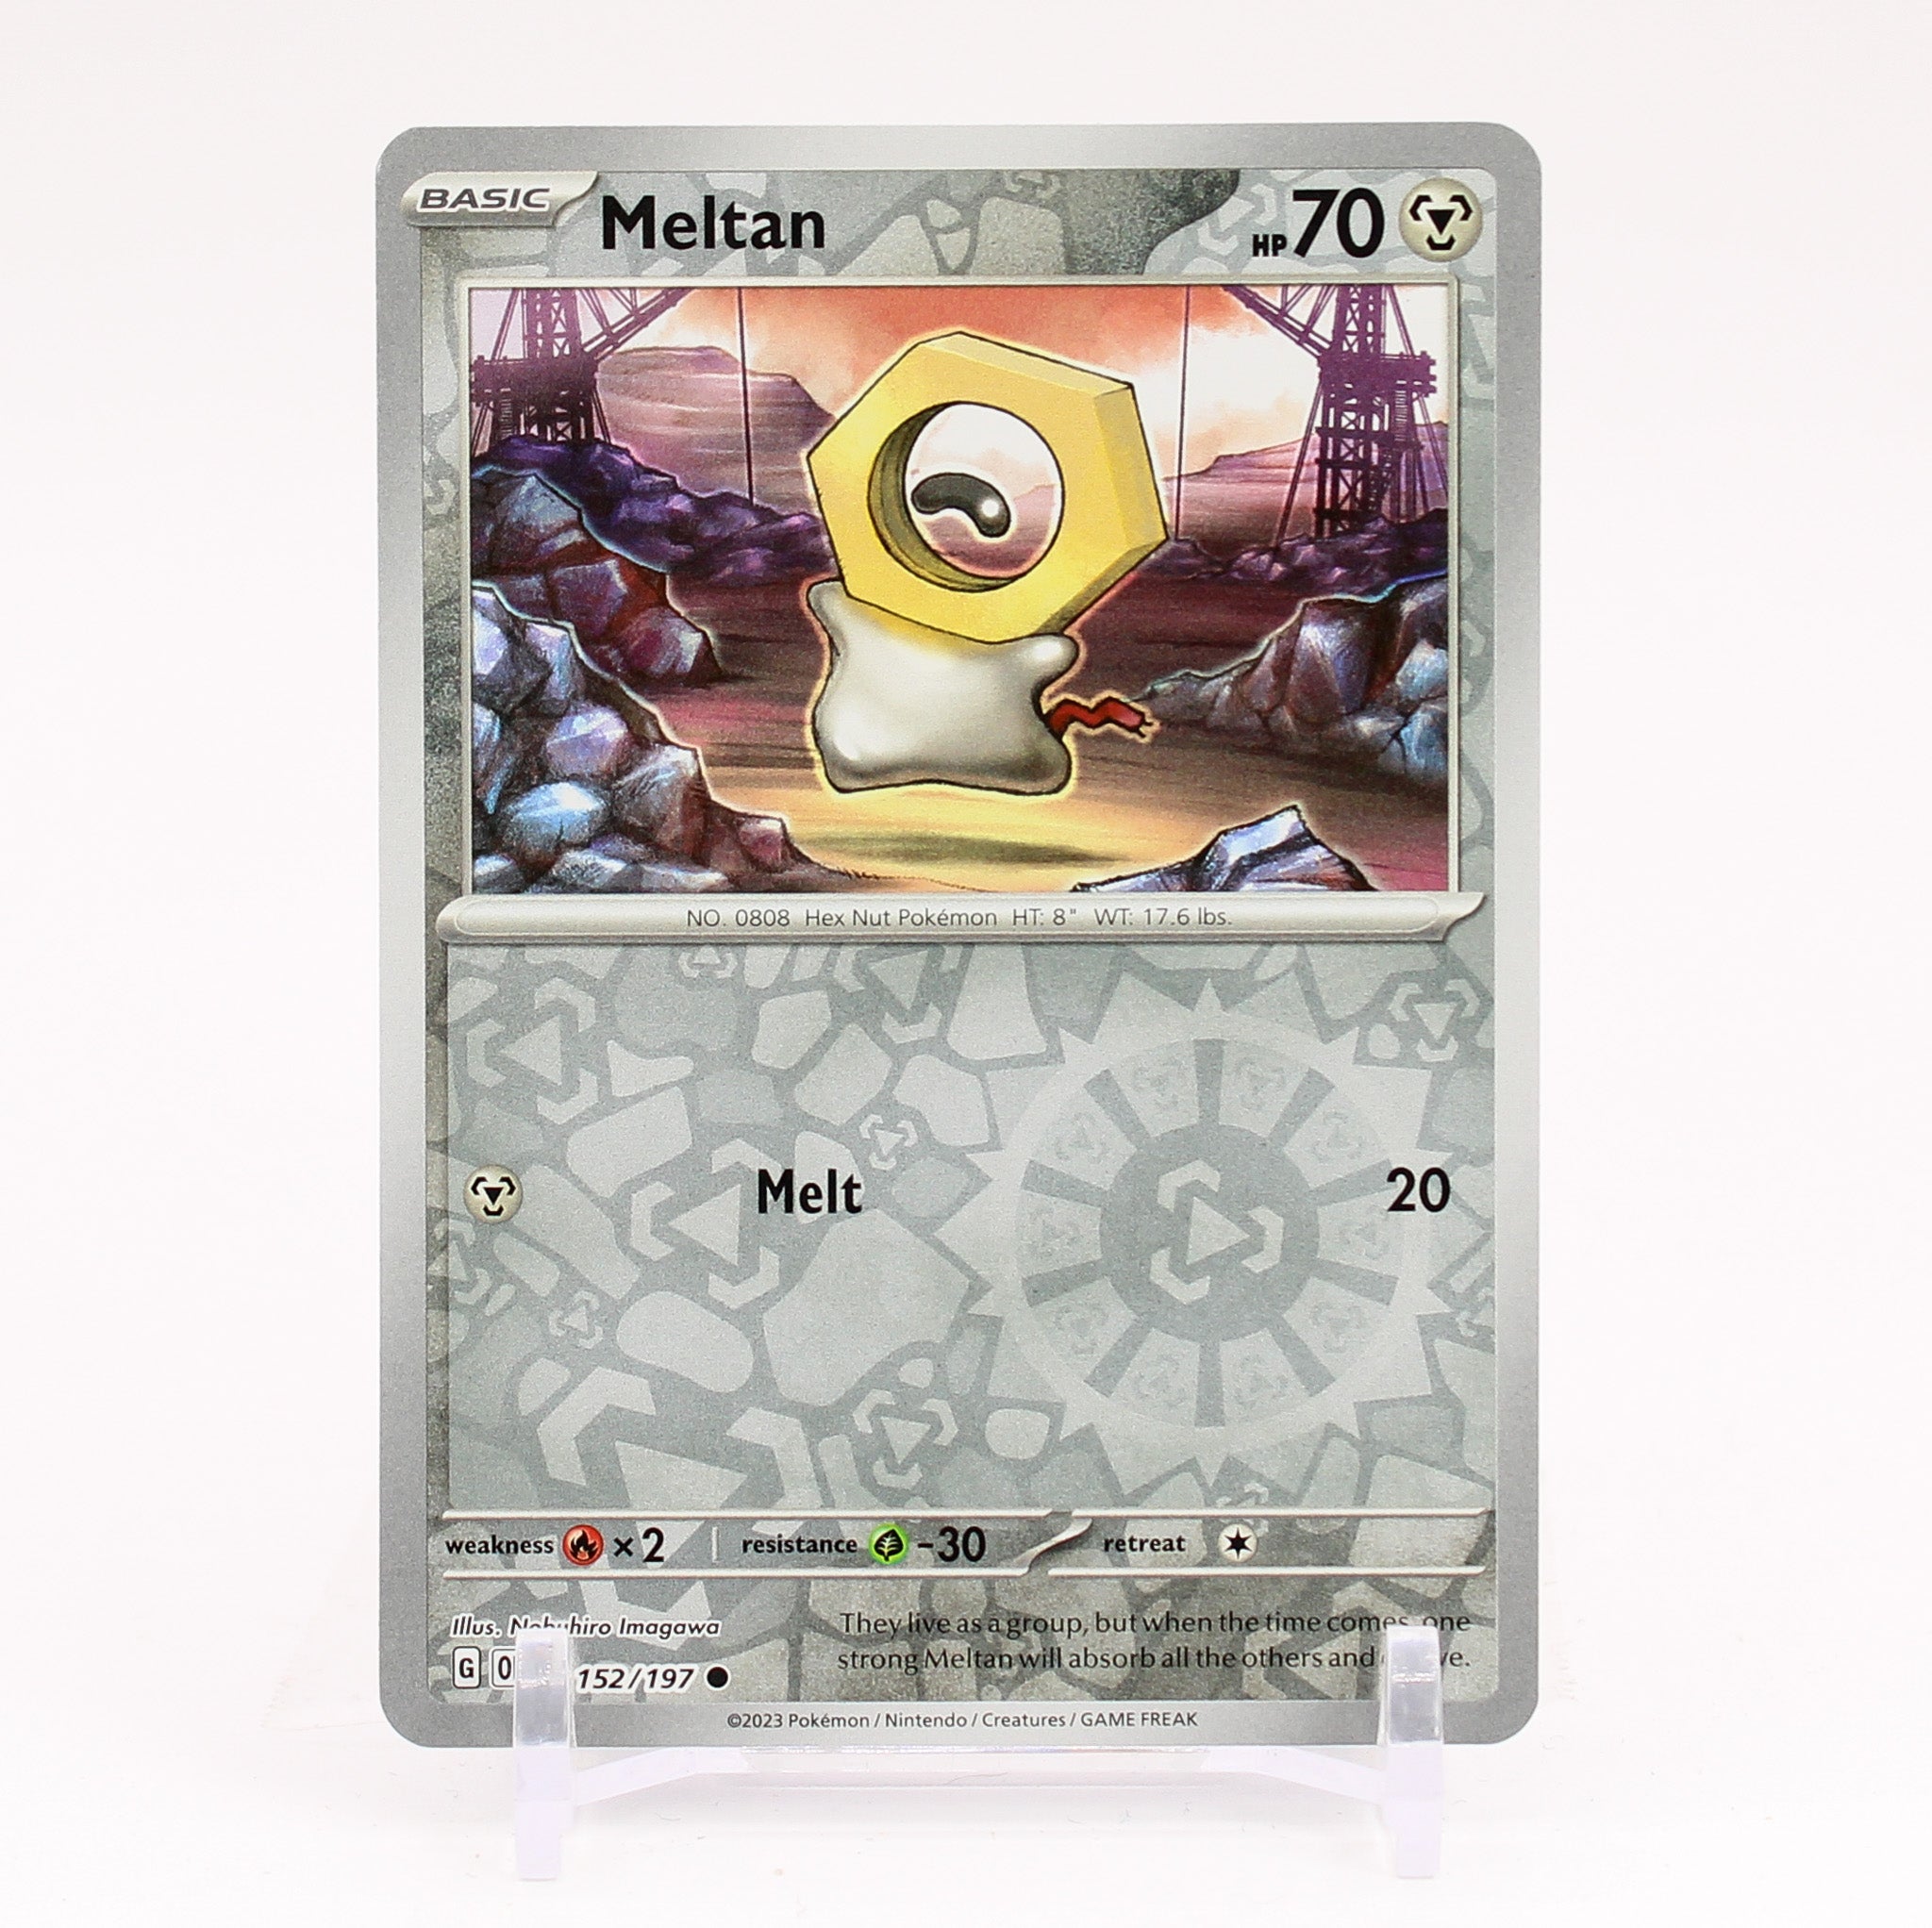 Shellder - 090/165 151 Reverse Holo Common Pokemon - NM/MINT